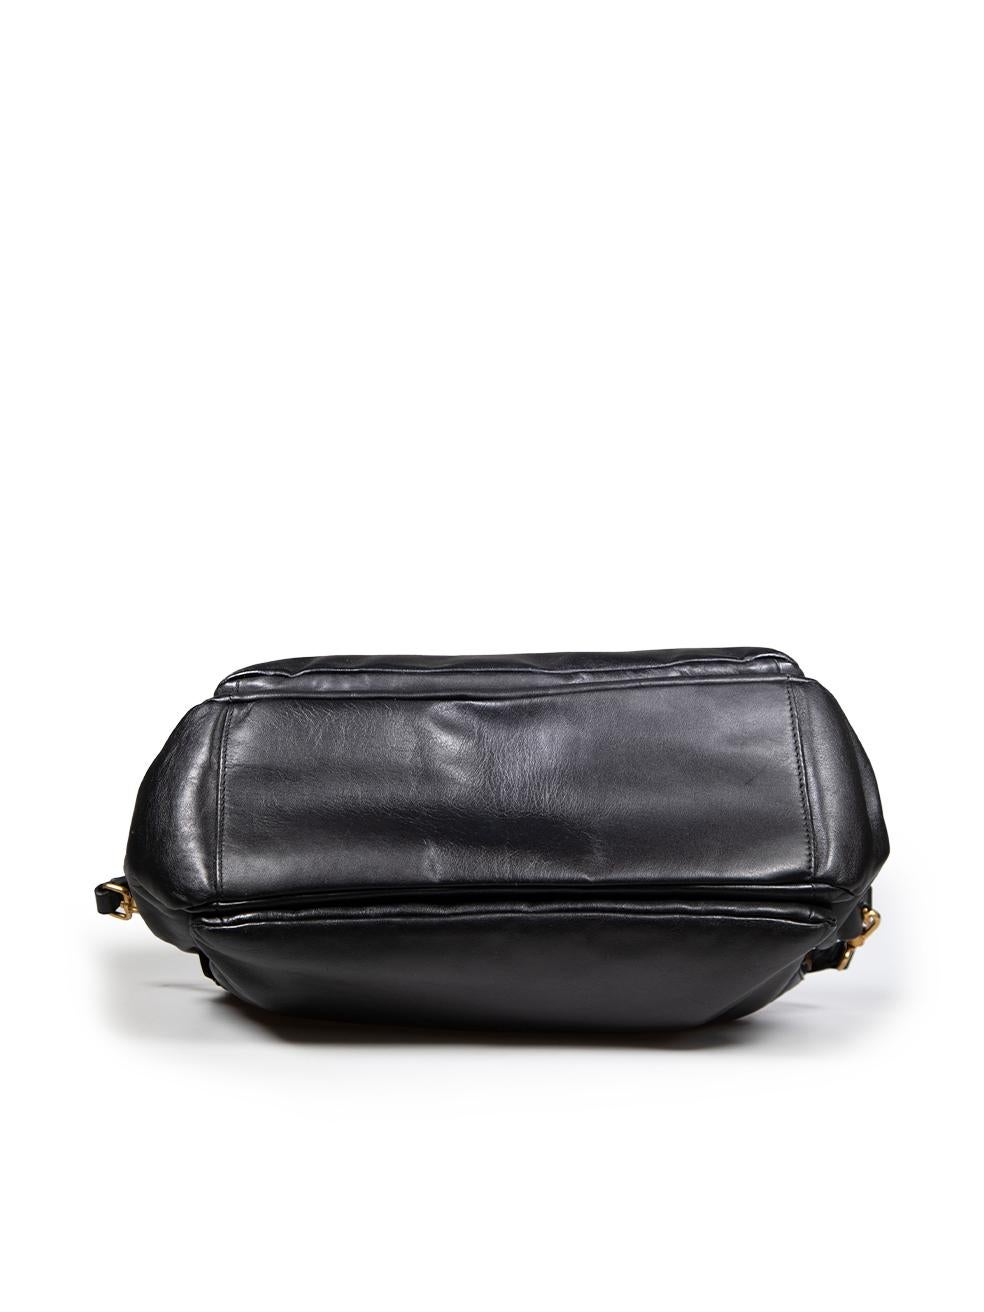 Women's Marc Jacobs Marc By Marc Jacobs Black Leather Medium Handbag For Sale